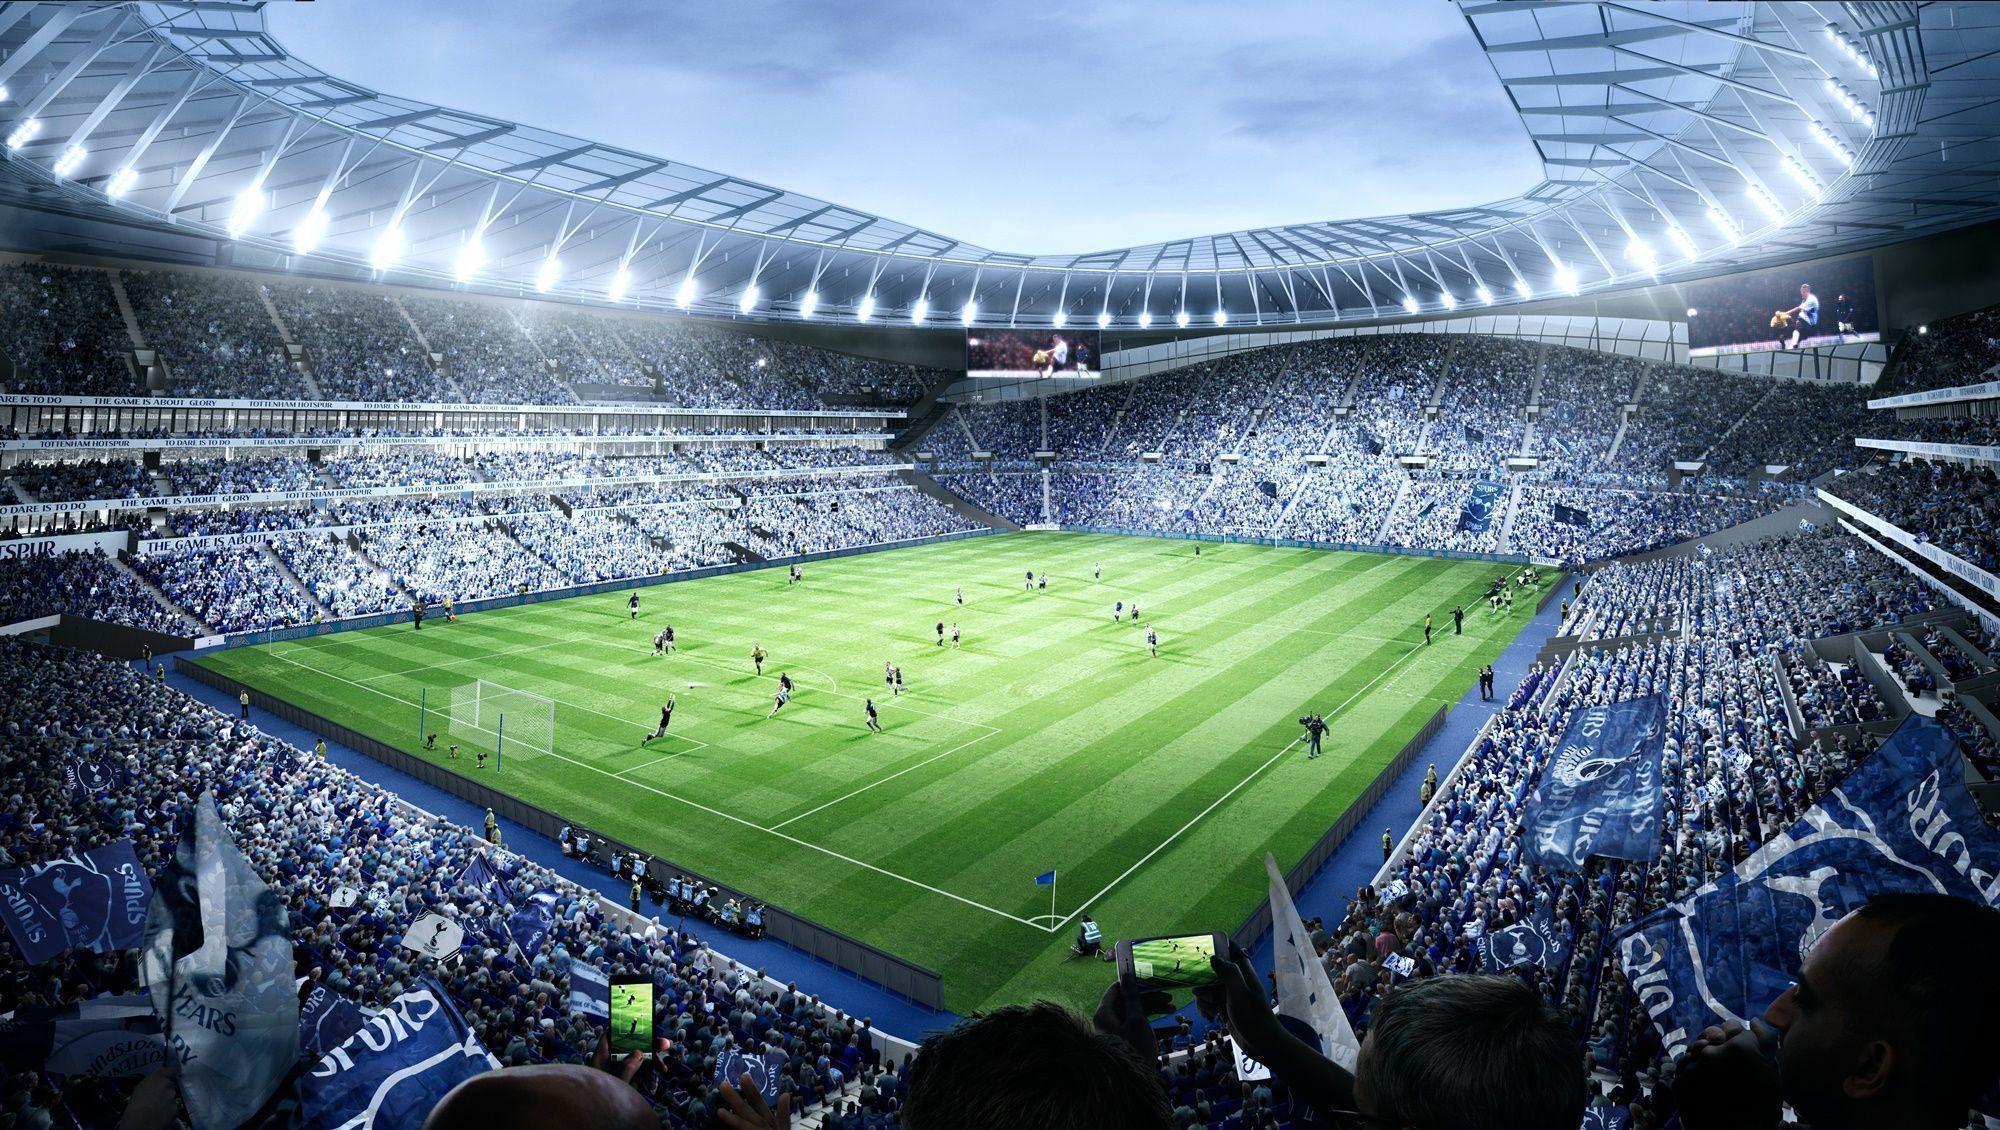 Tottenham Hotspur Wallpaper Image Photo Picture Background